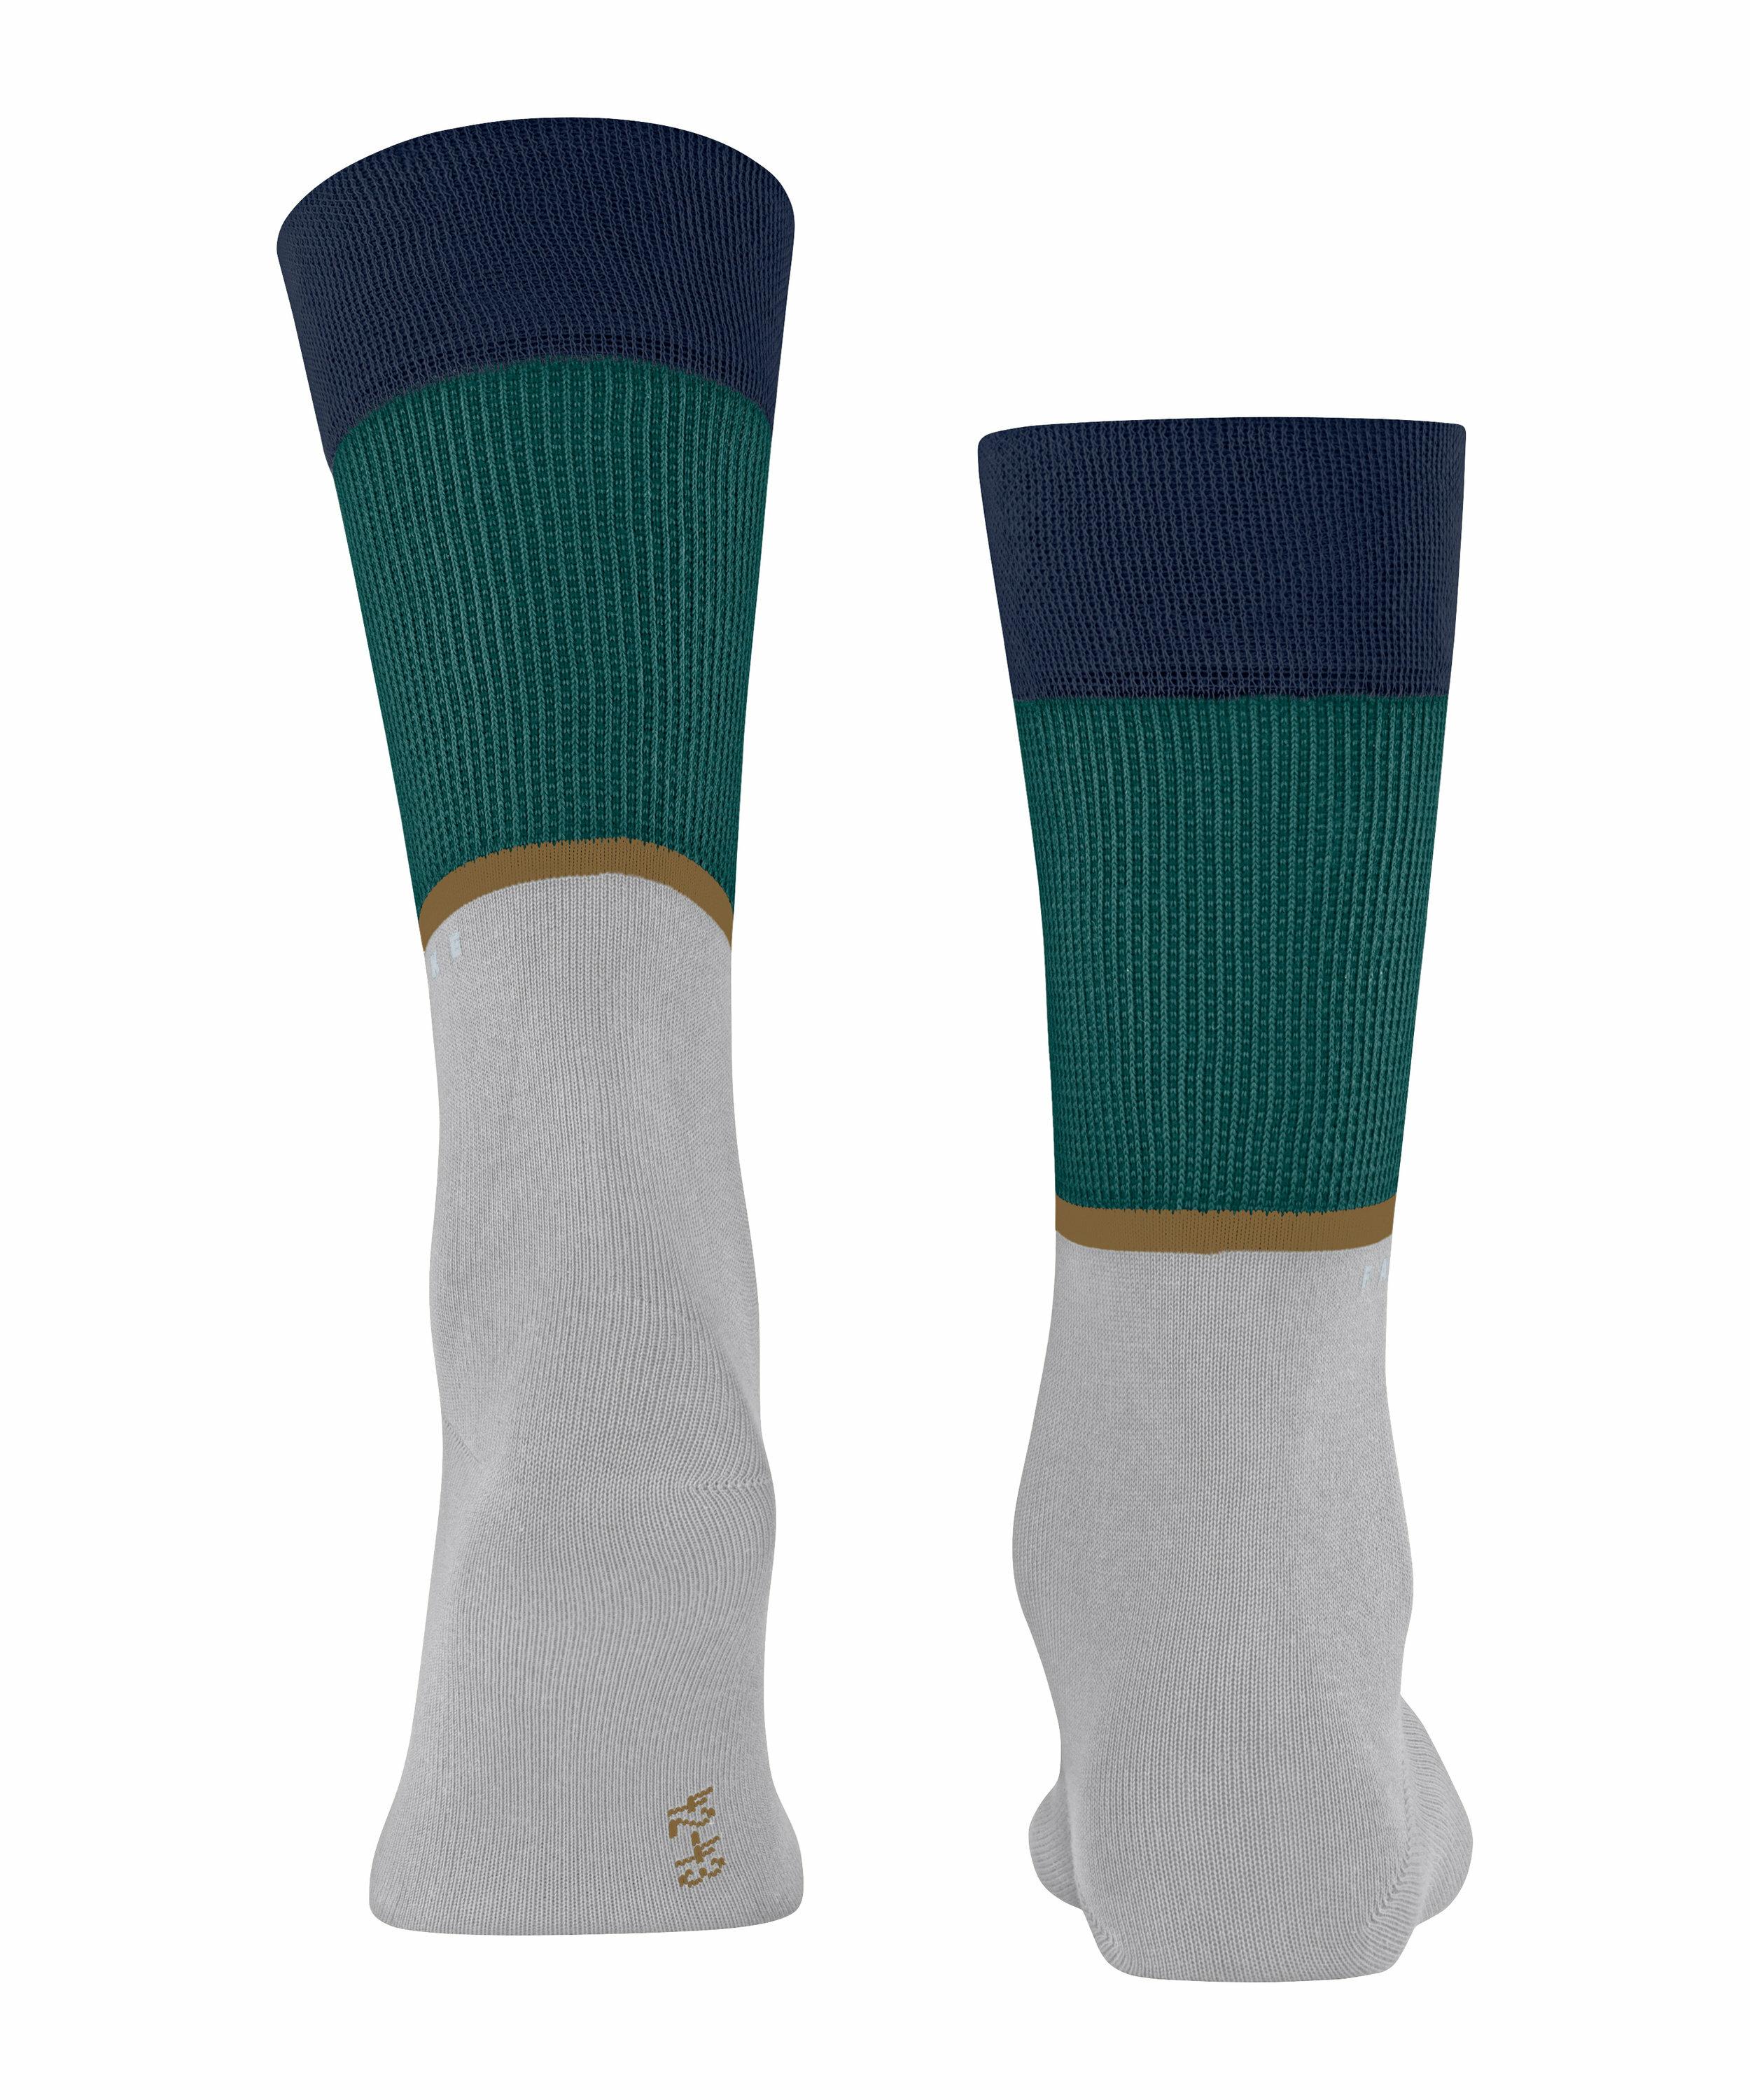 FALKE Unlimited Socken, 44-45, Grau, Mehrfarbig, Baumwolle (Bio), 12485-320 günstig online kaufen